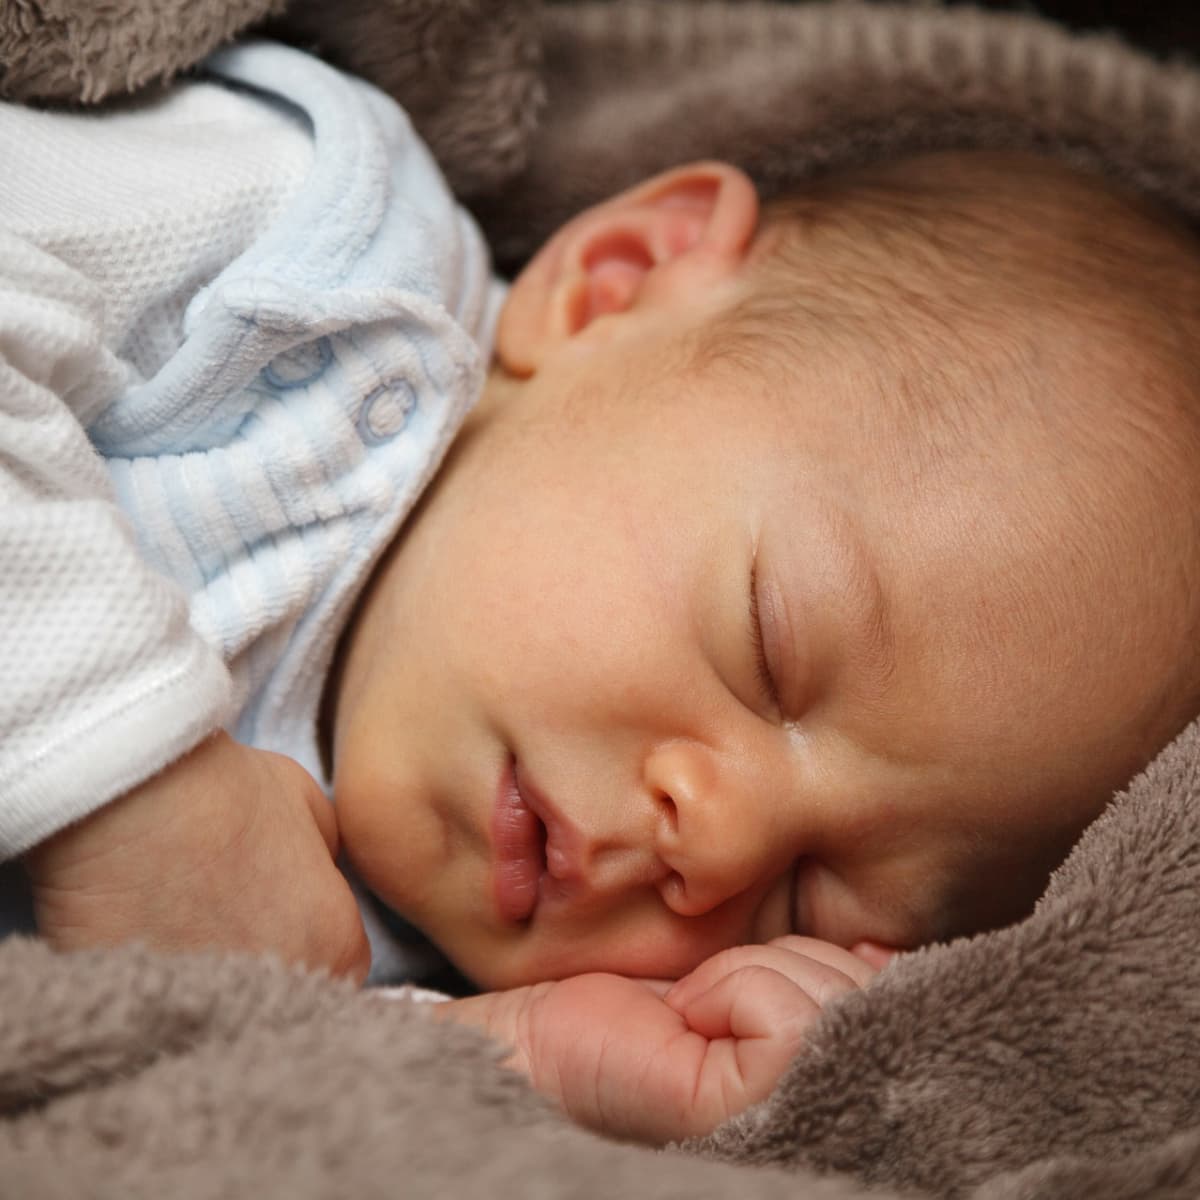 Newborn Essentials for an Overnight Stay - WeHaveKids